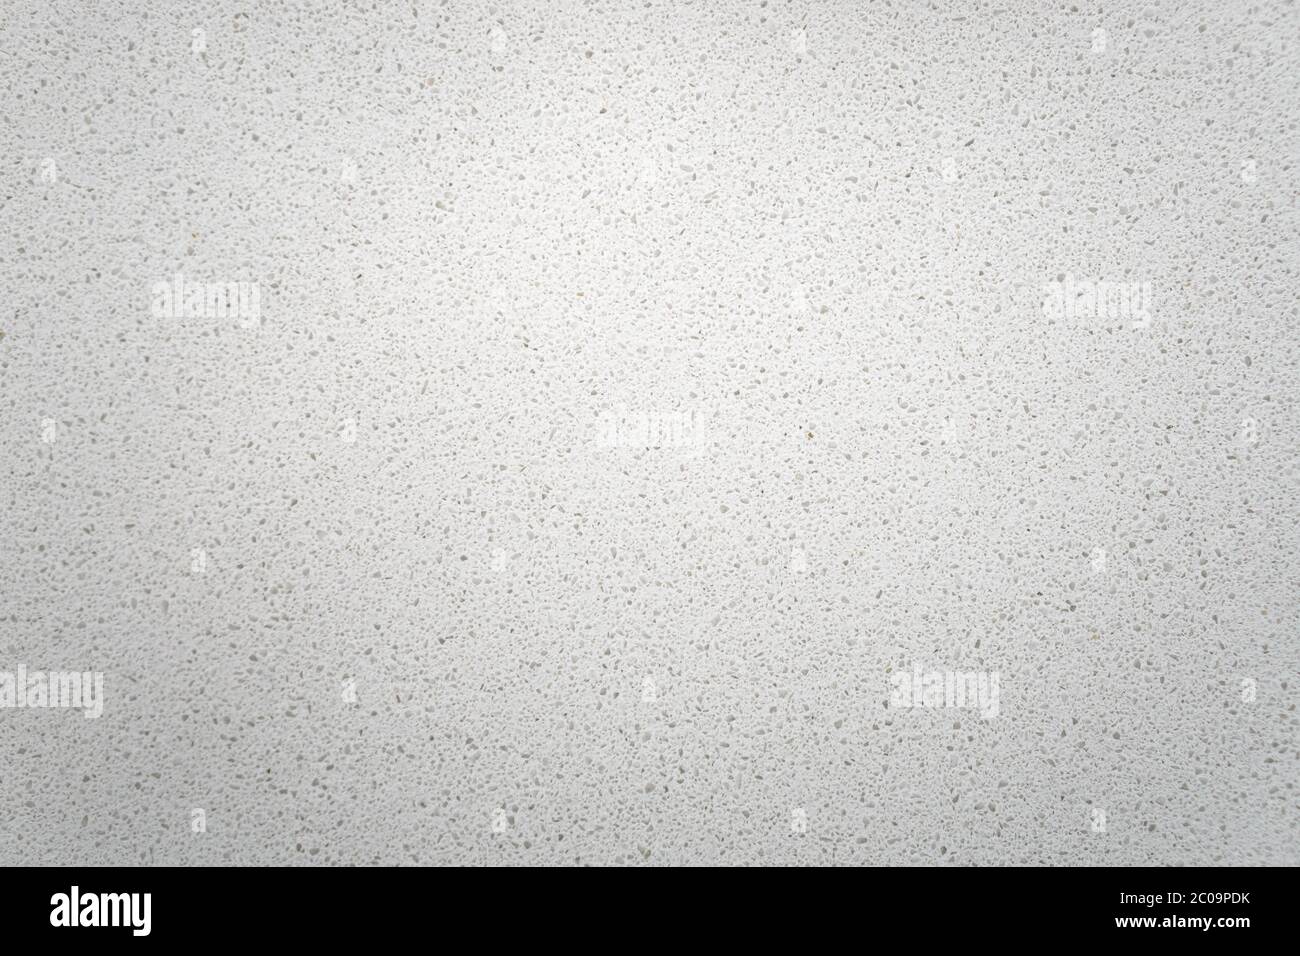 White quartz background countertop texture. This light background is taken from a bright off-white quartz kitchen counter. Stock Photo